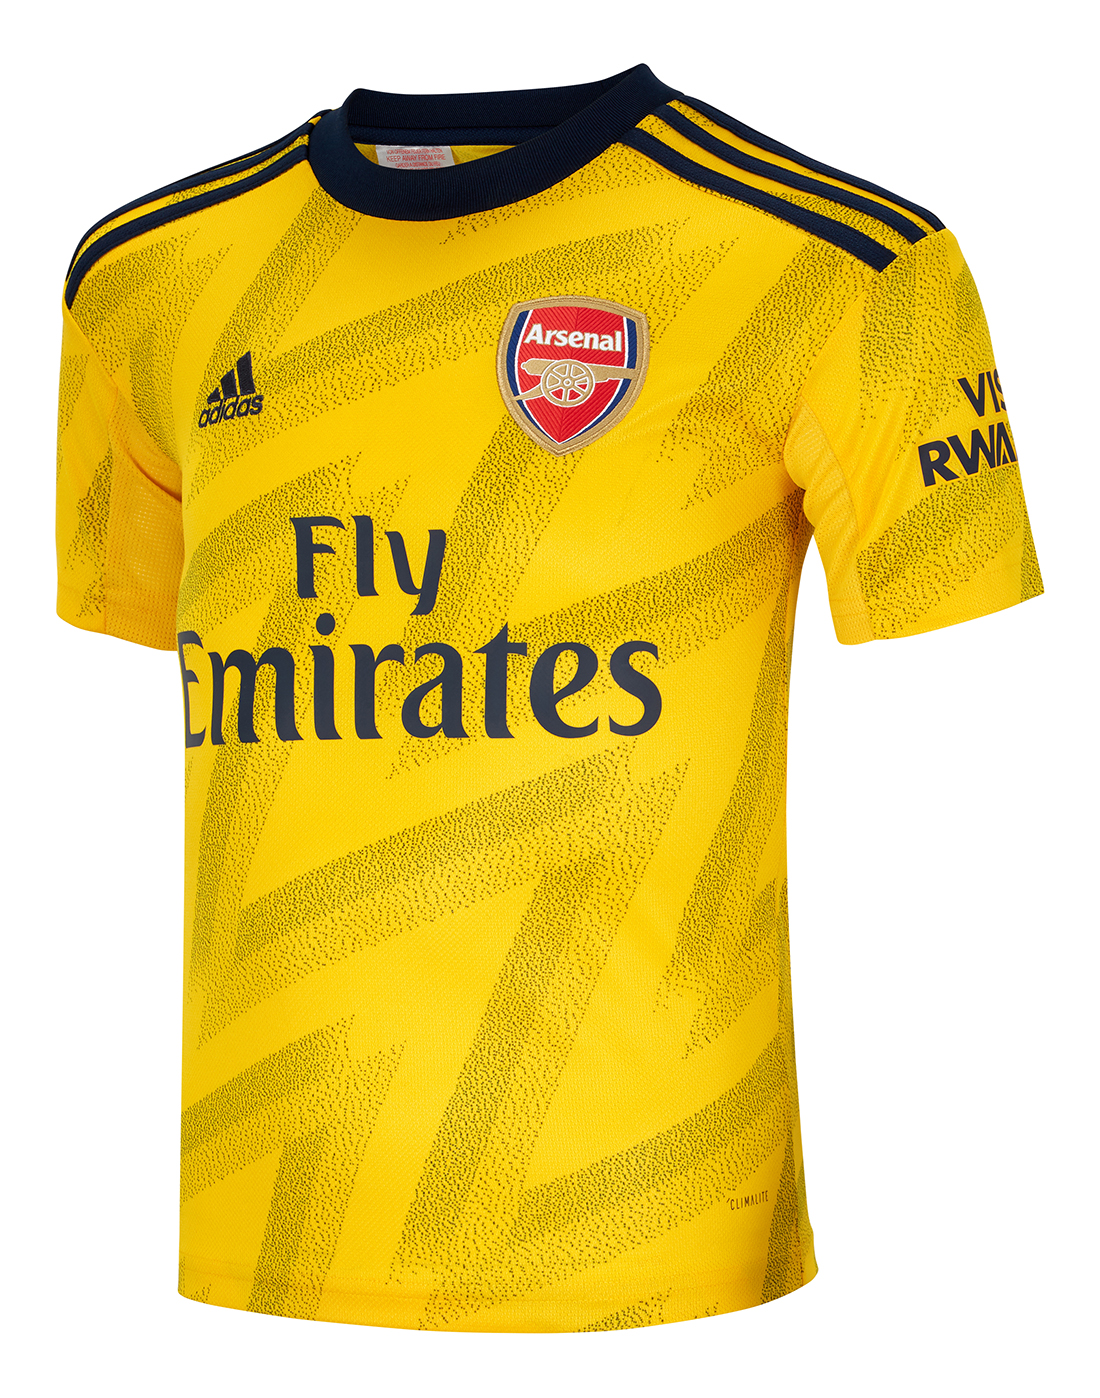 arsenal away shirt yellow